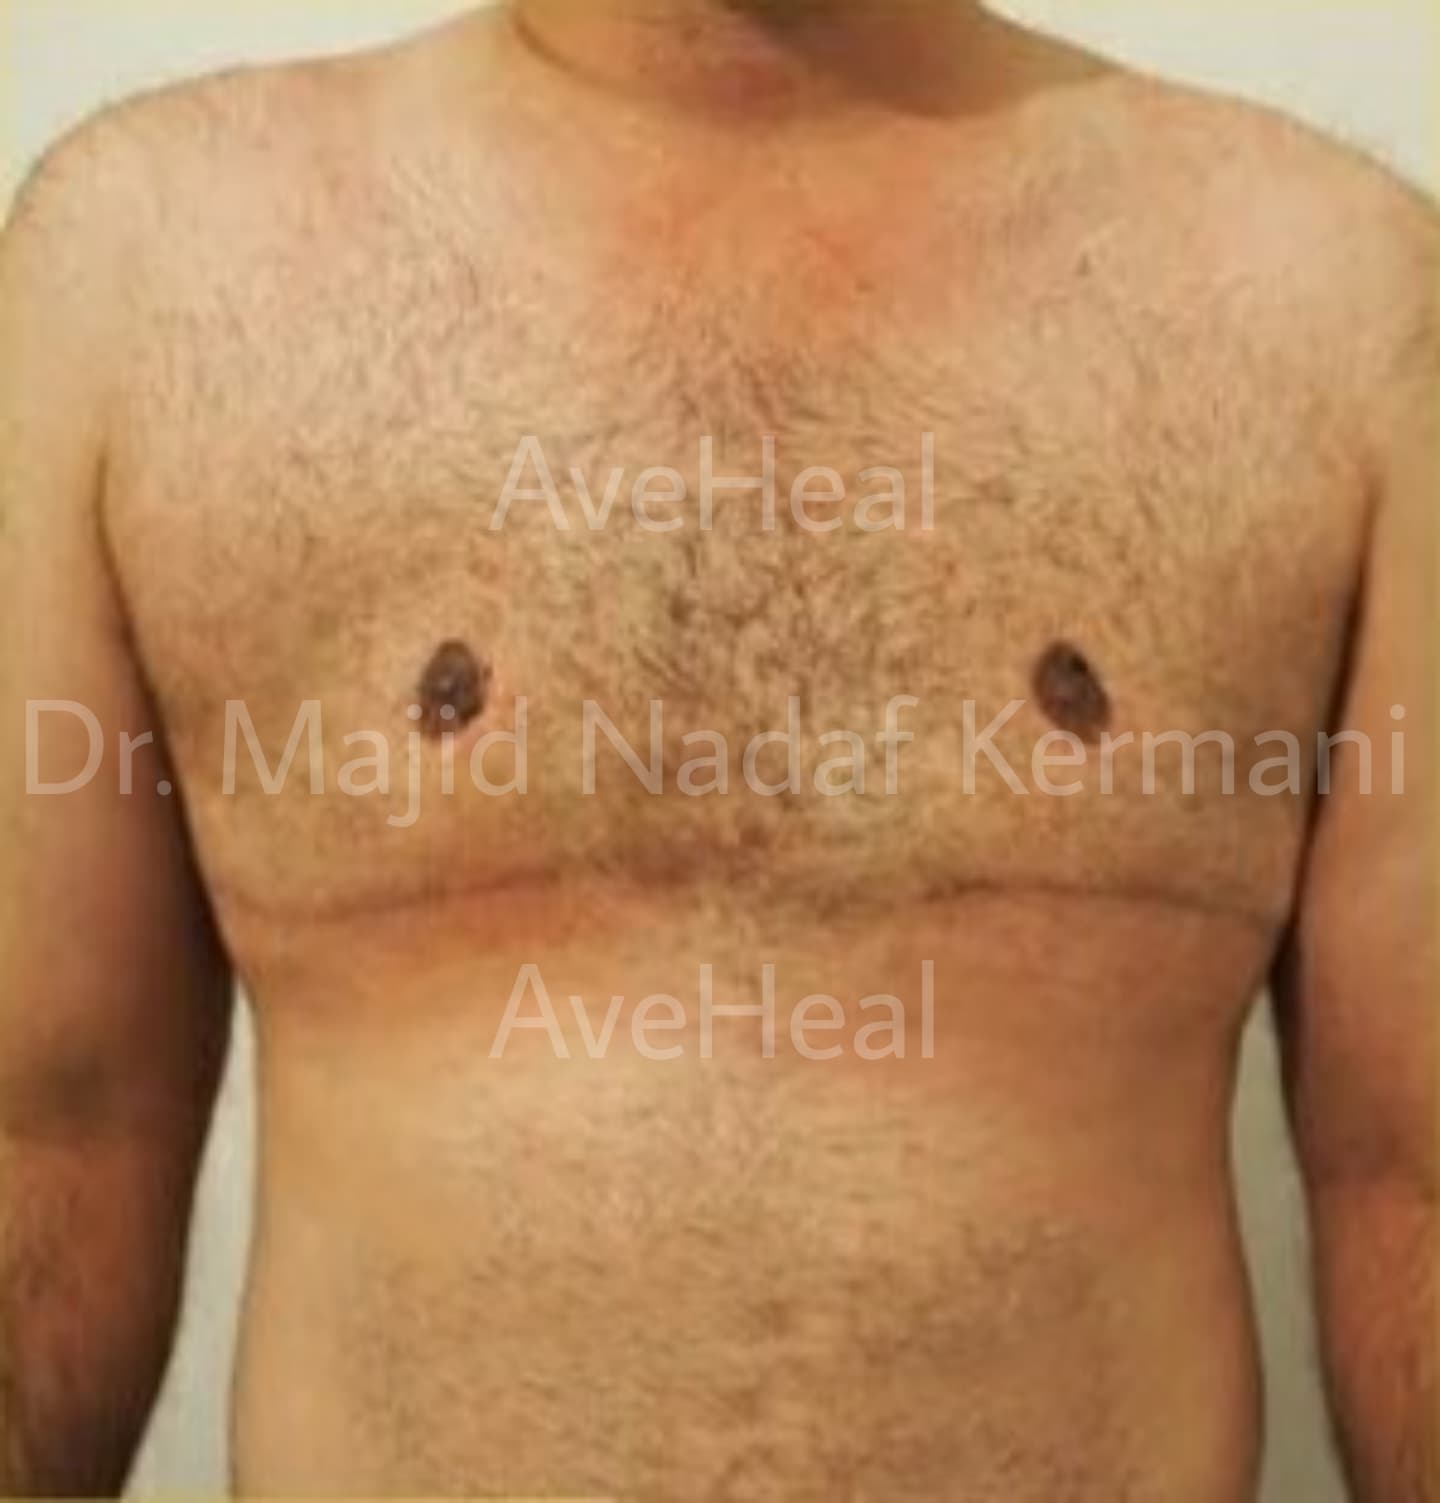 after-gynacomastia-dr-majid-nadaf-kermani